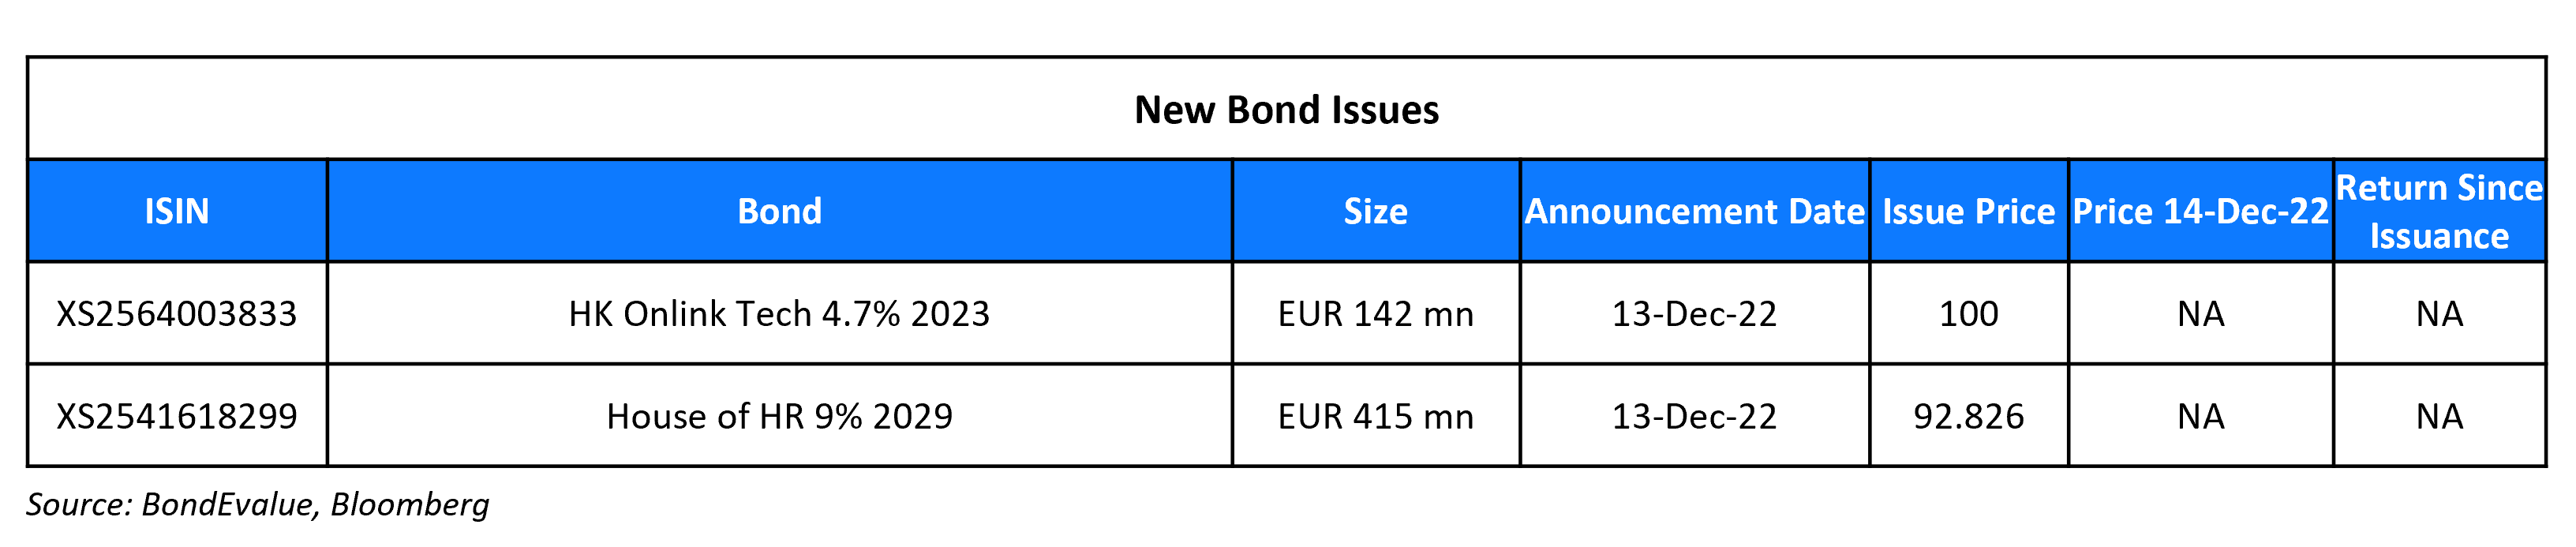 New Bond Issues 14 Dec 22